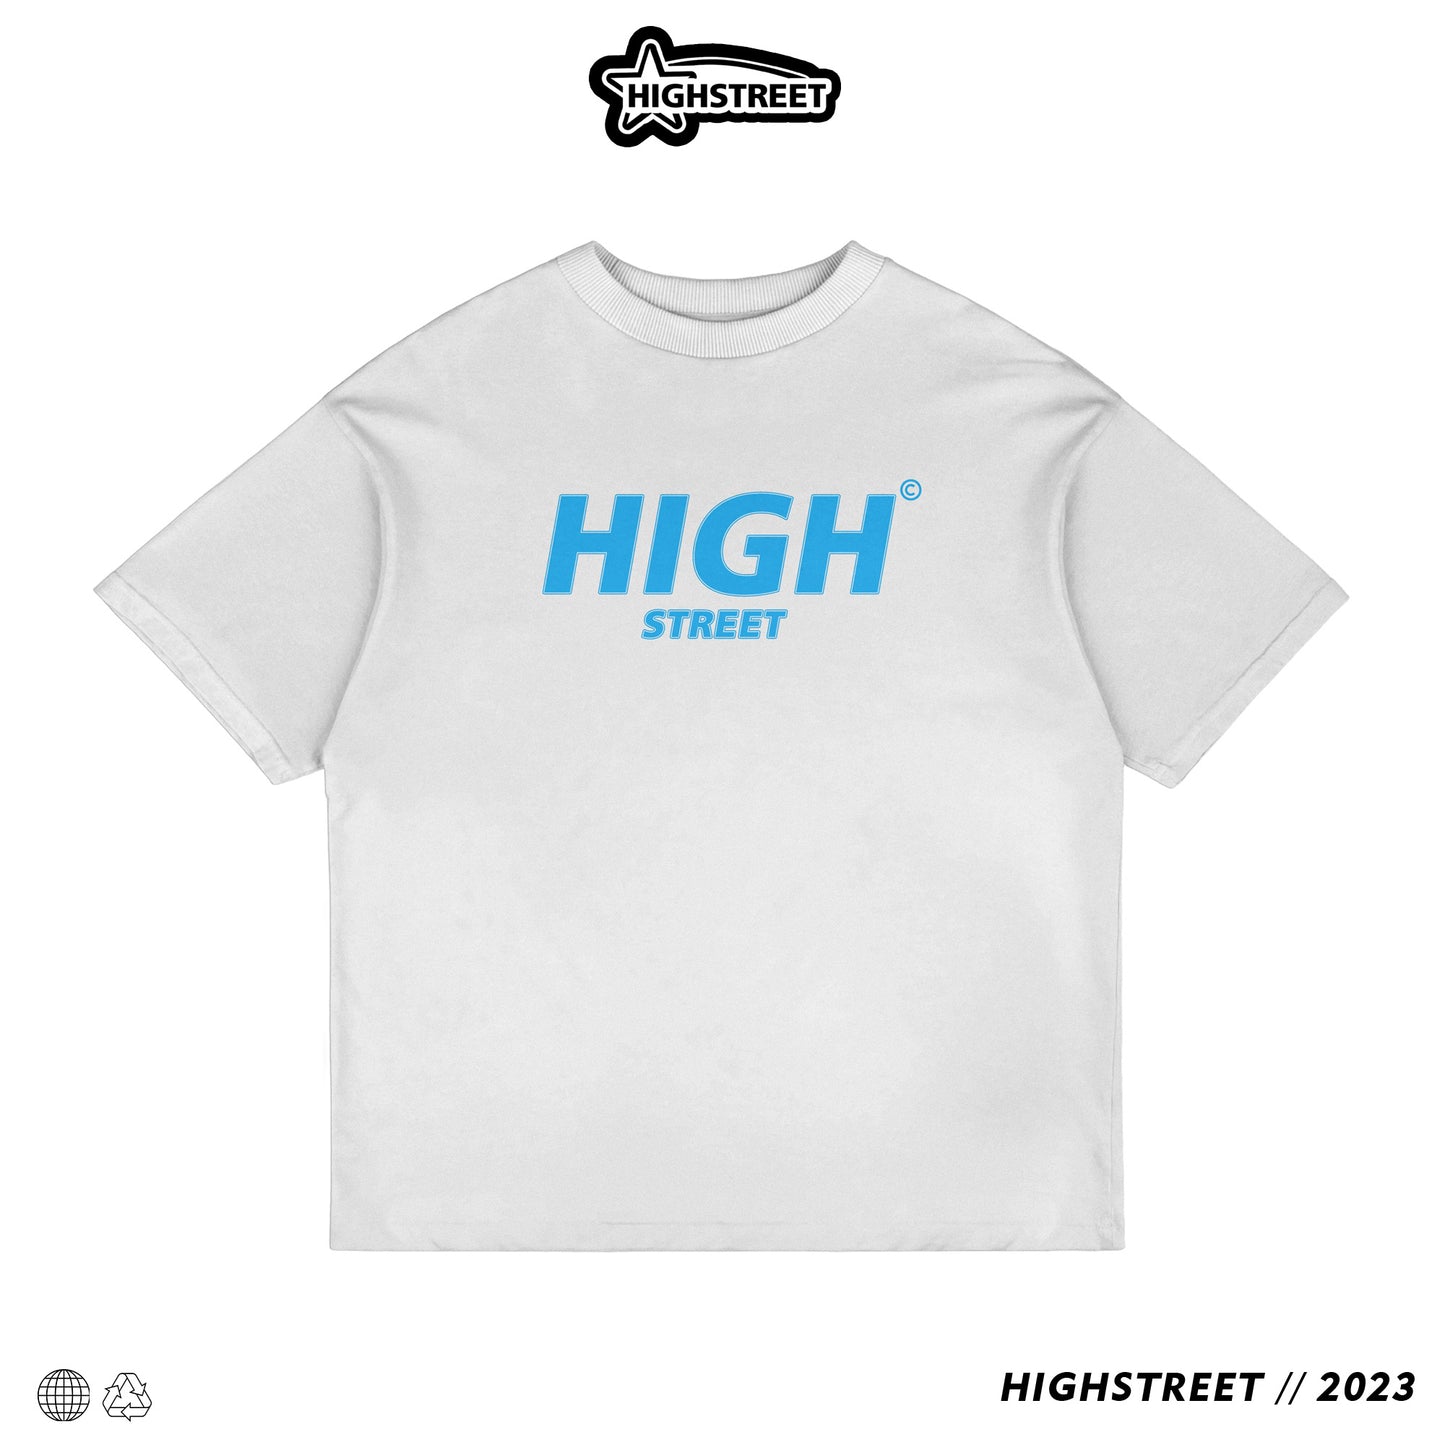 HIGH STREET WORLD TOUR T-SHIRT (BLUE/WHITE)